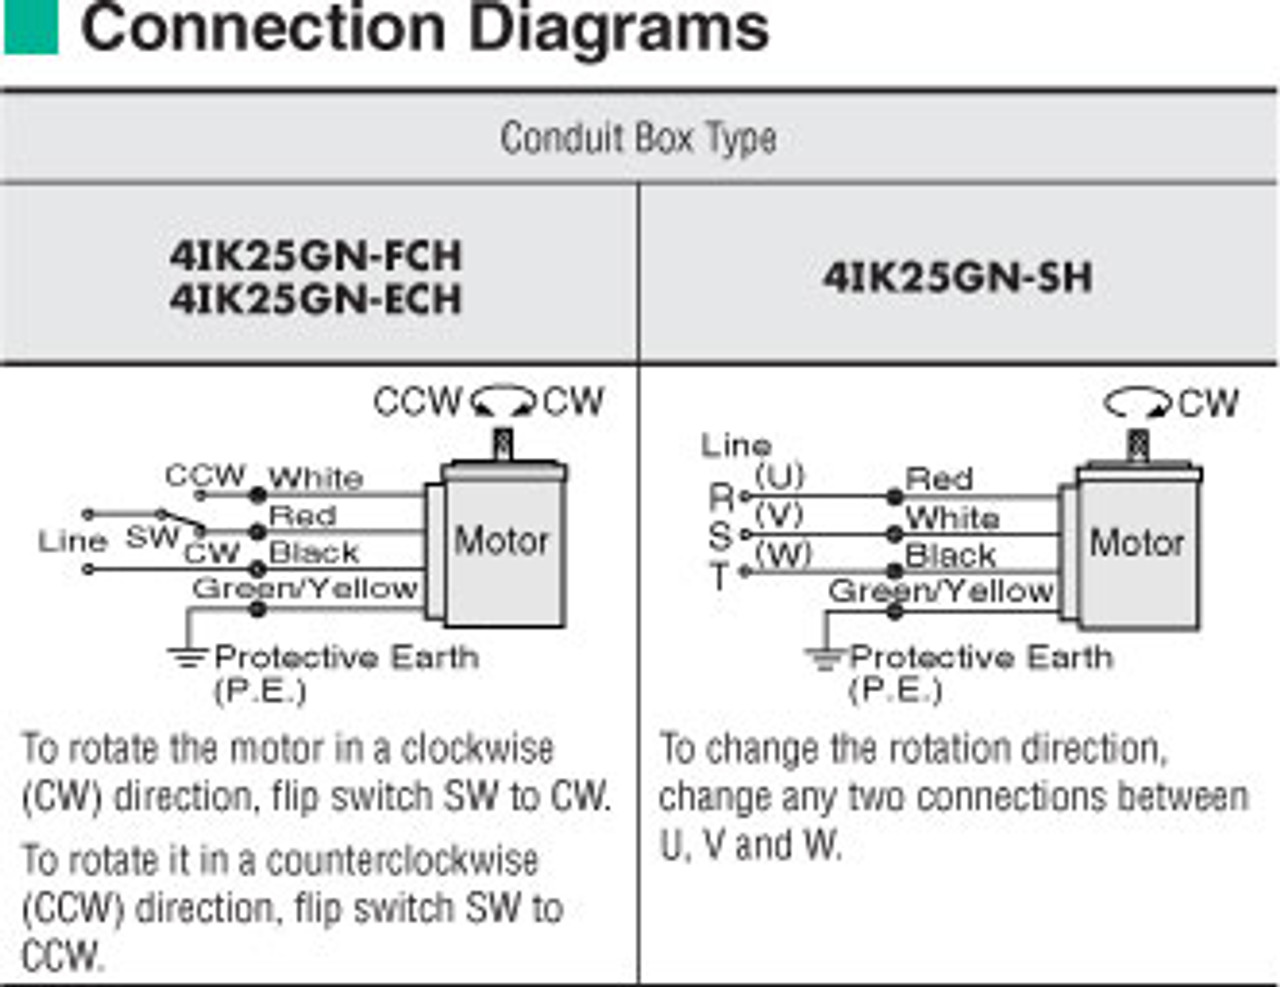 4IK25GN-SH / 4GN75SA - Connection